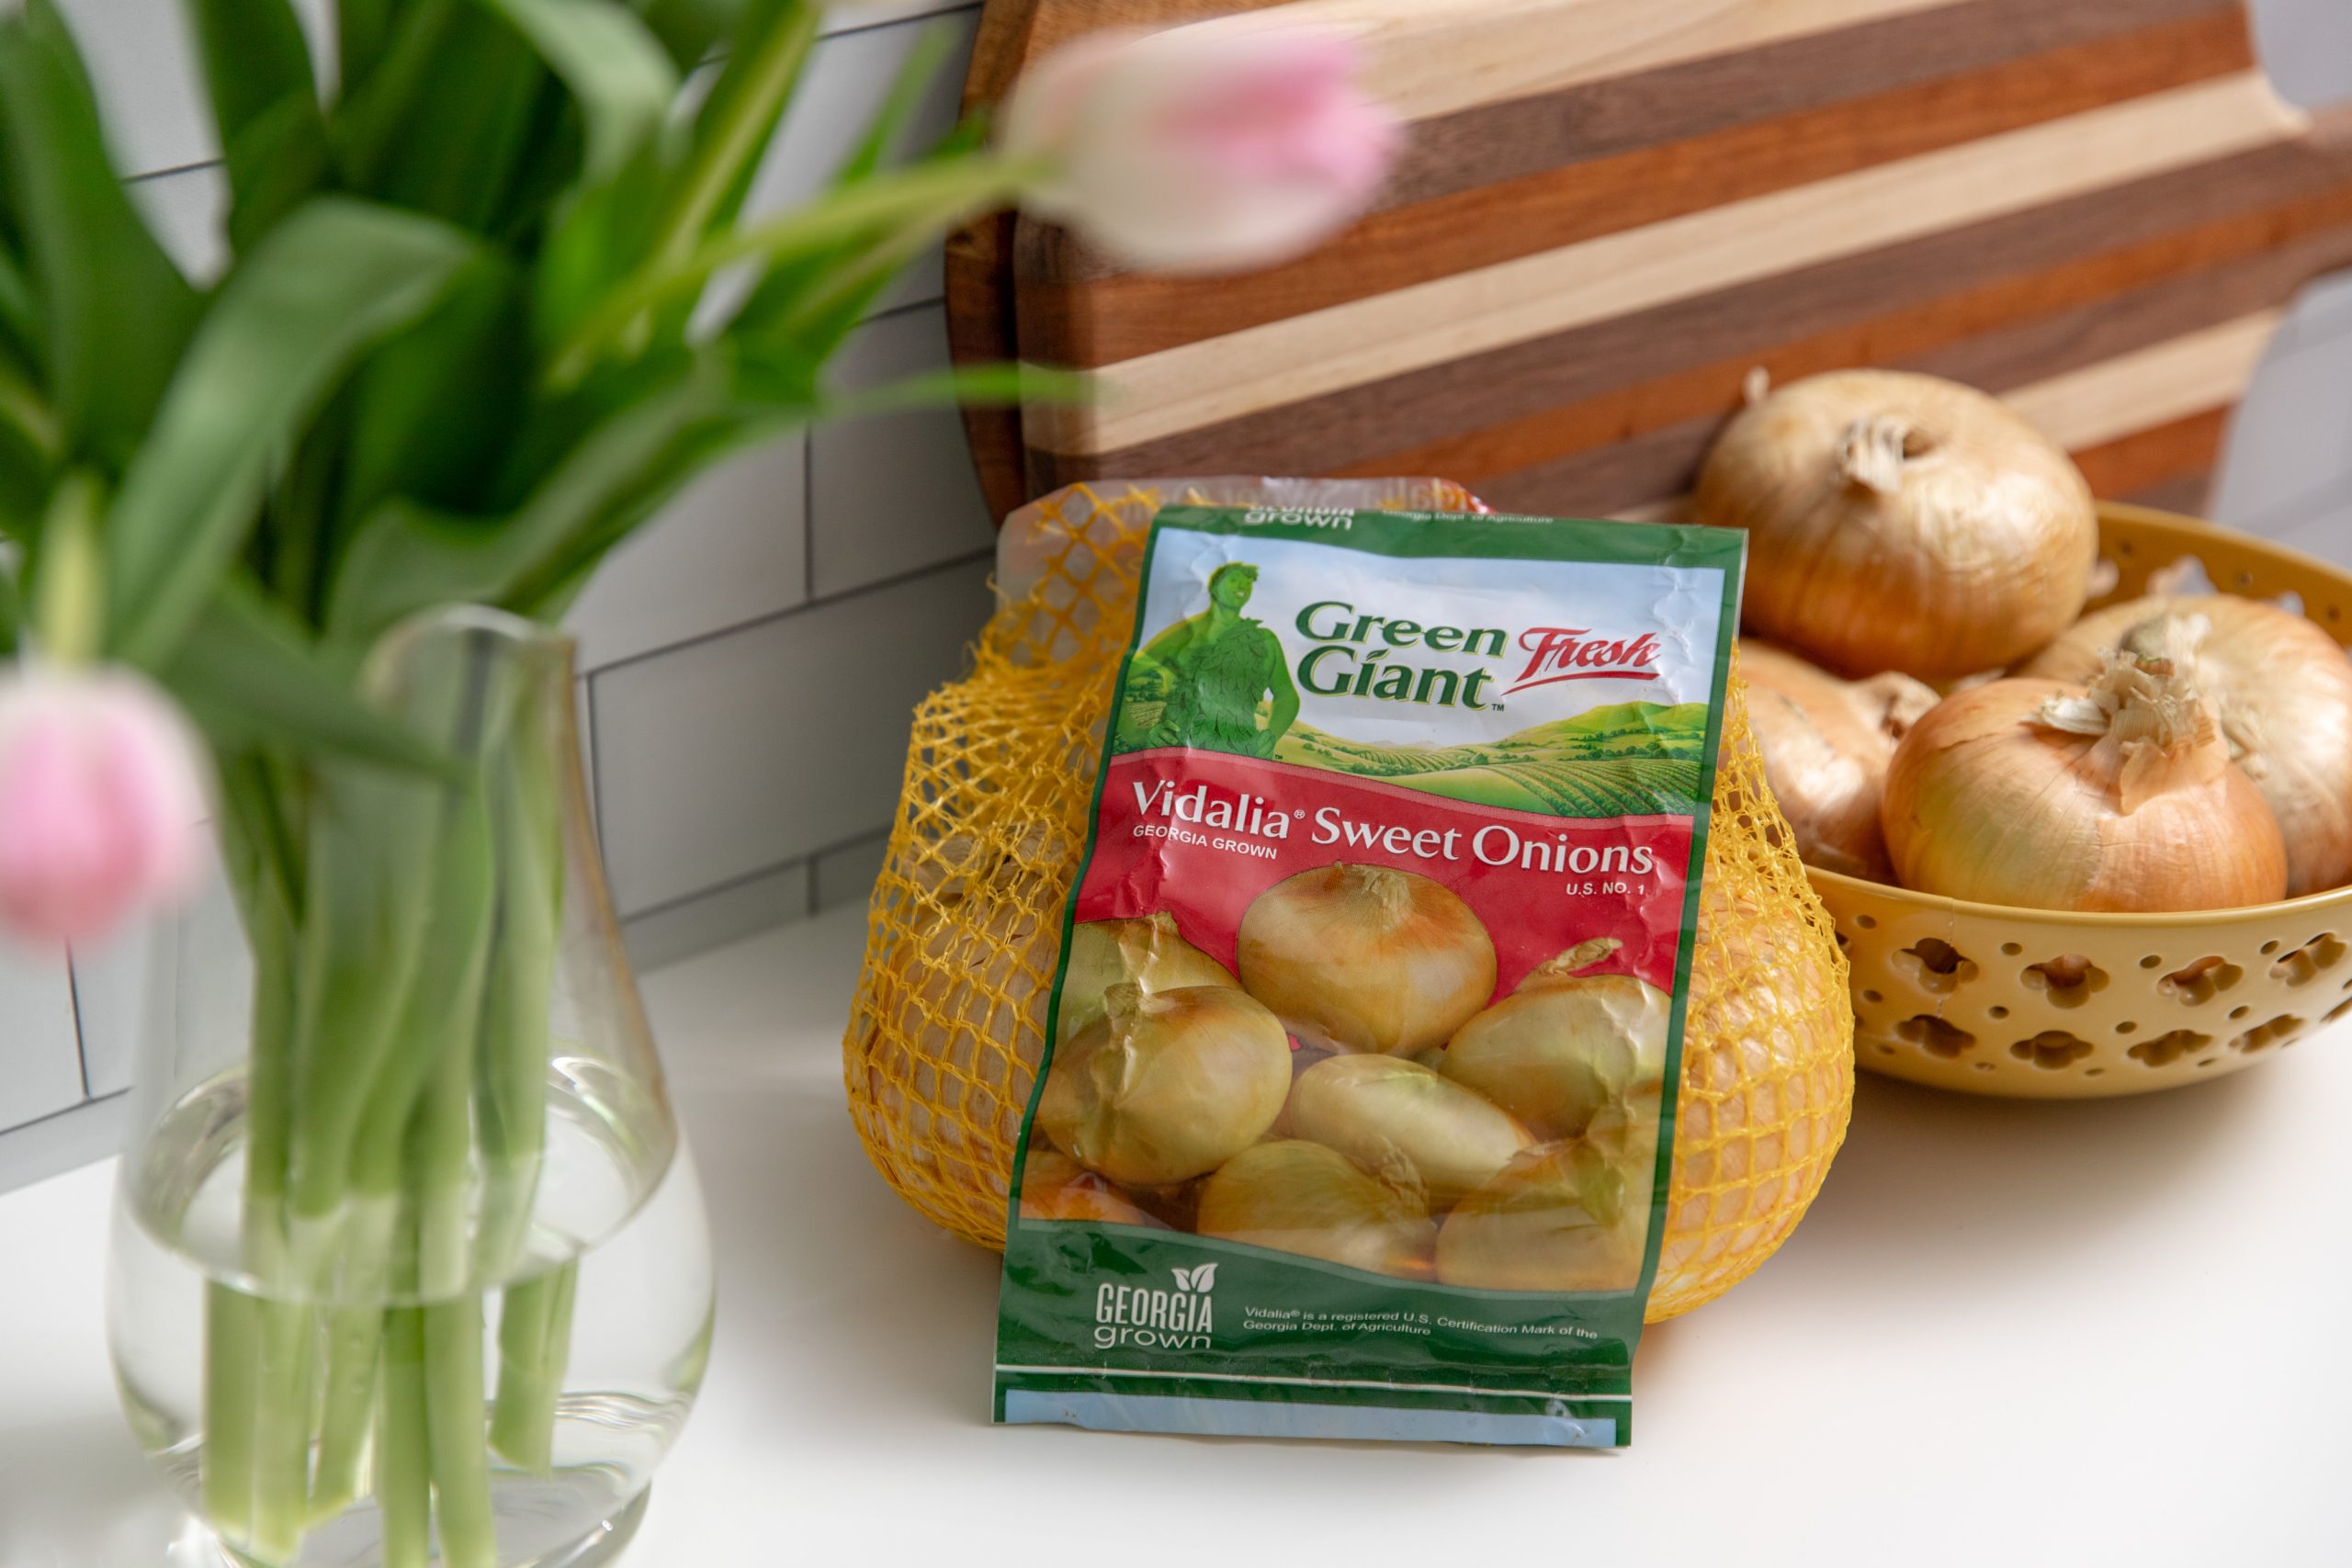 Green Giant™ Fresh Vidalia® Sweet Onions